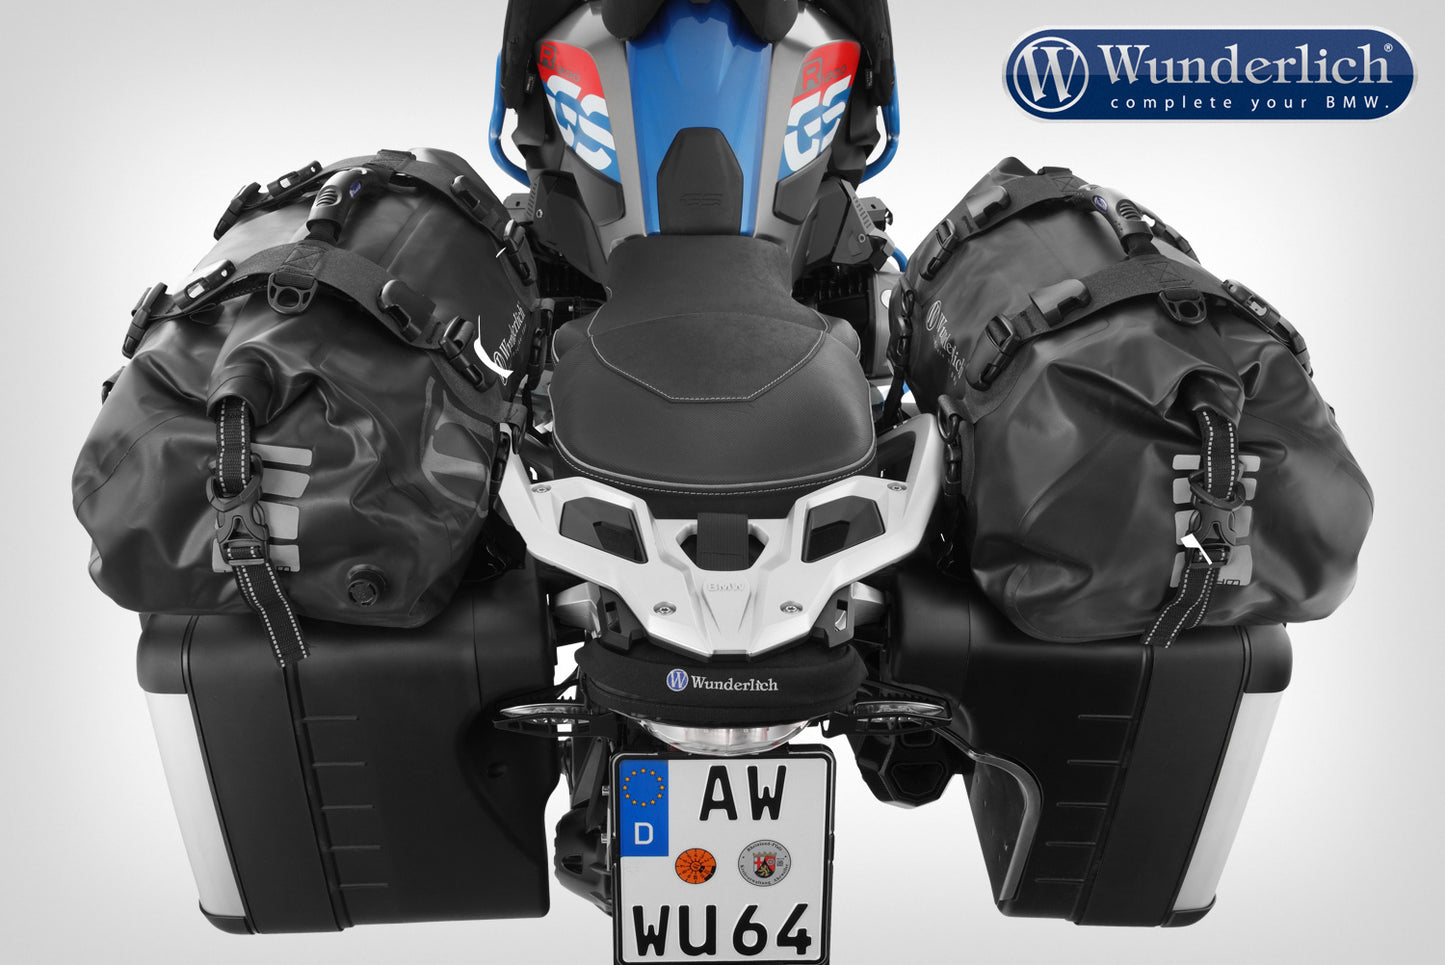 Wunderlich Luggage rails for original Vario case R 1200/1250 GS LC - Set - black